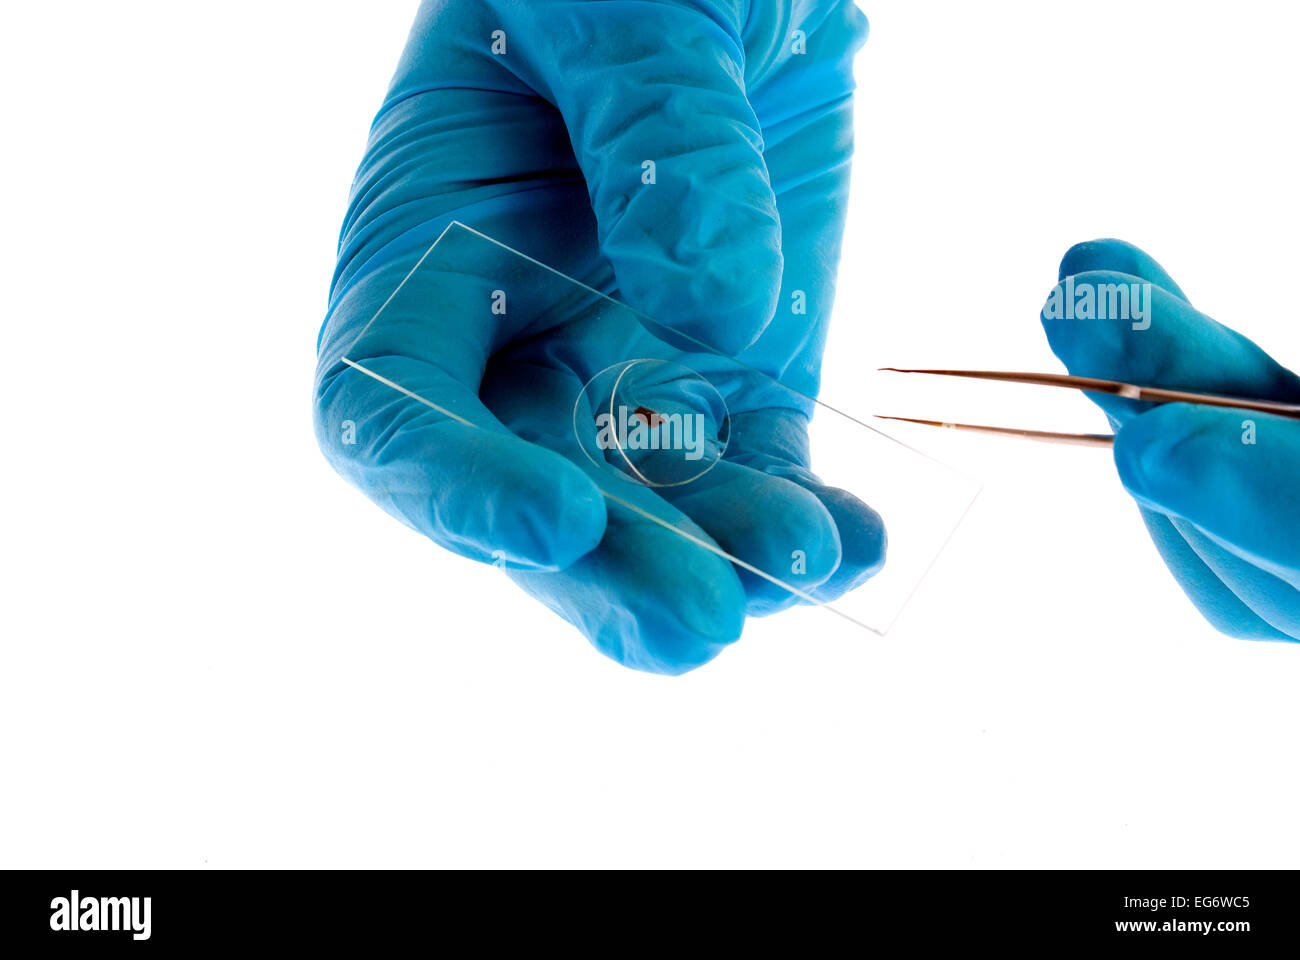 Gloved hands holding microscope slide Stock Photo